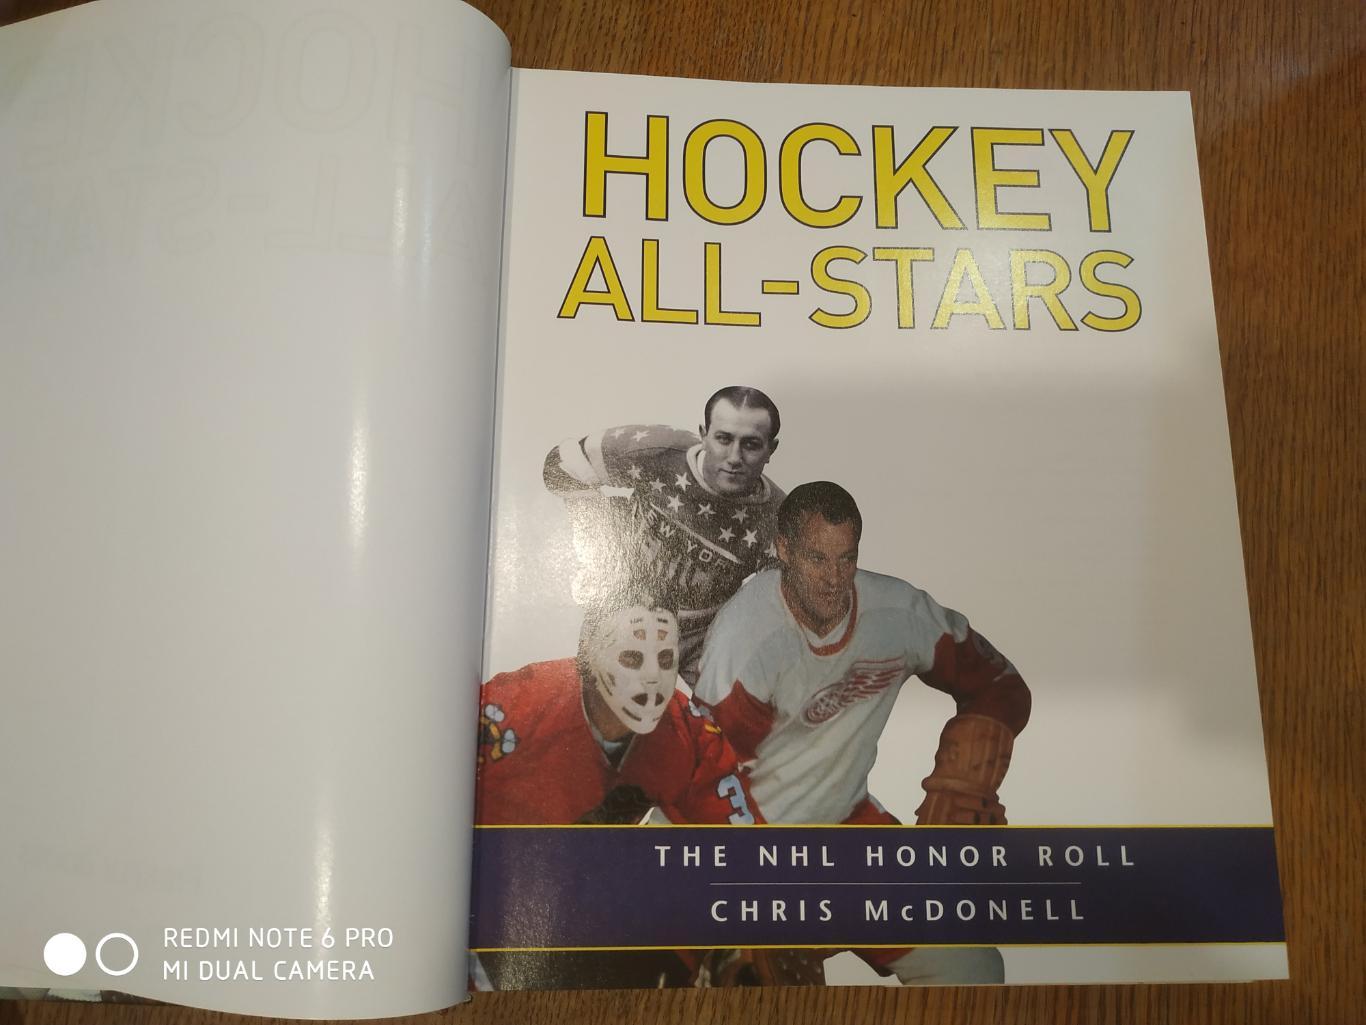 КНИГА СПРАВОЧНИК 2000 HOCKEY ALL-STARS THE NHL HONOR ROLL CHRIS McDONELL FIREFLY 1